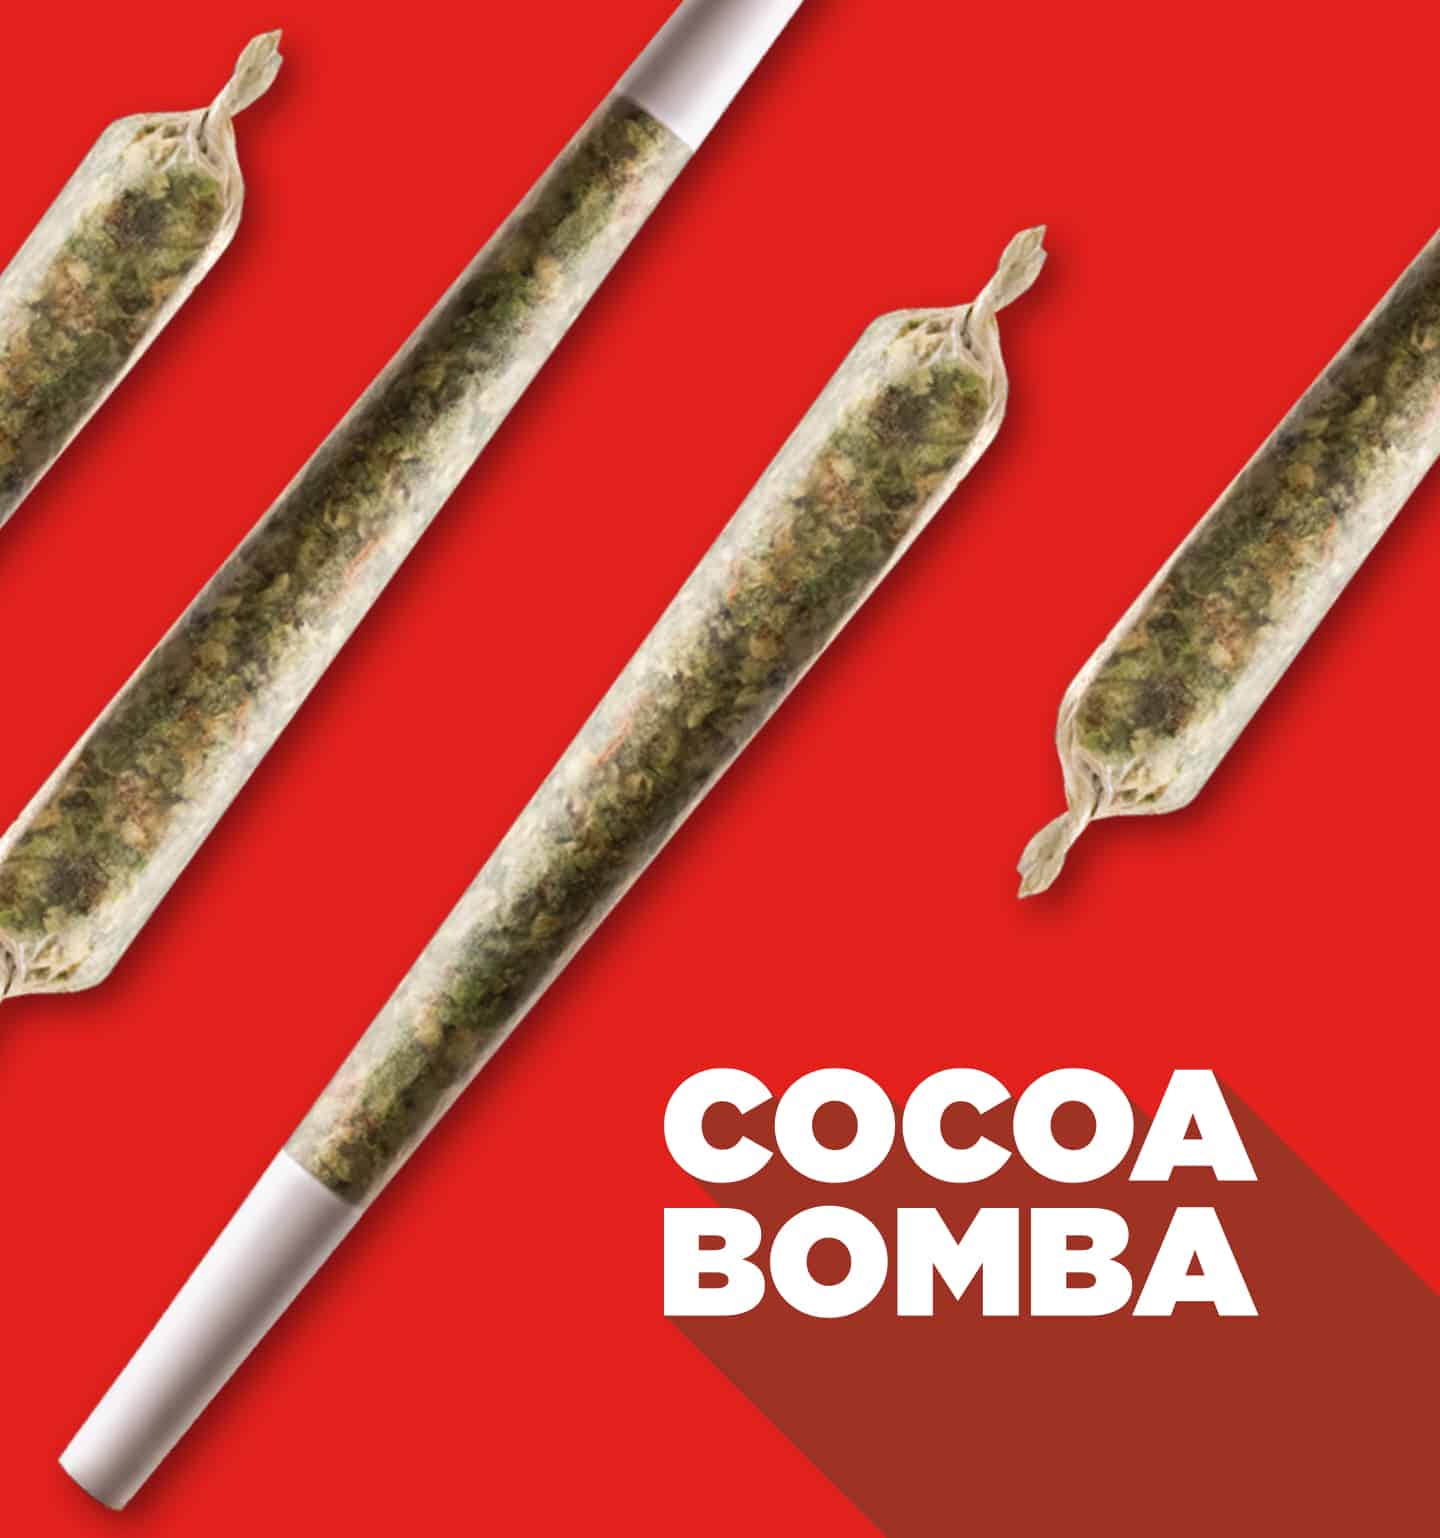 cocoa bomba with pre-roll